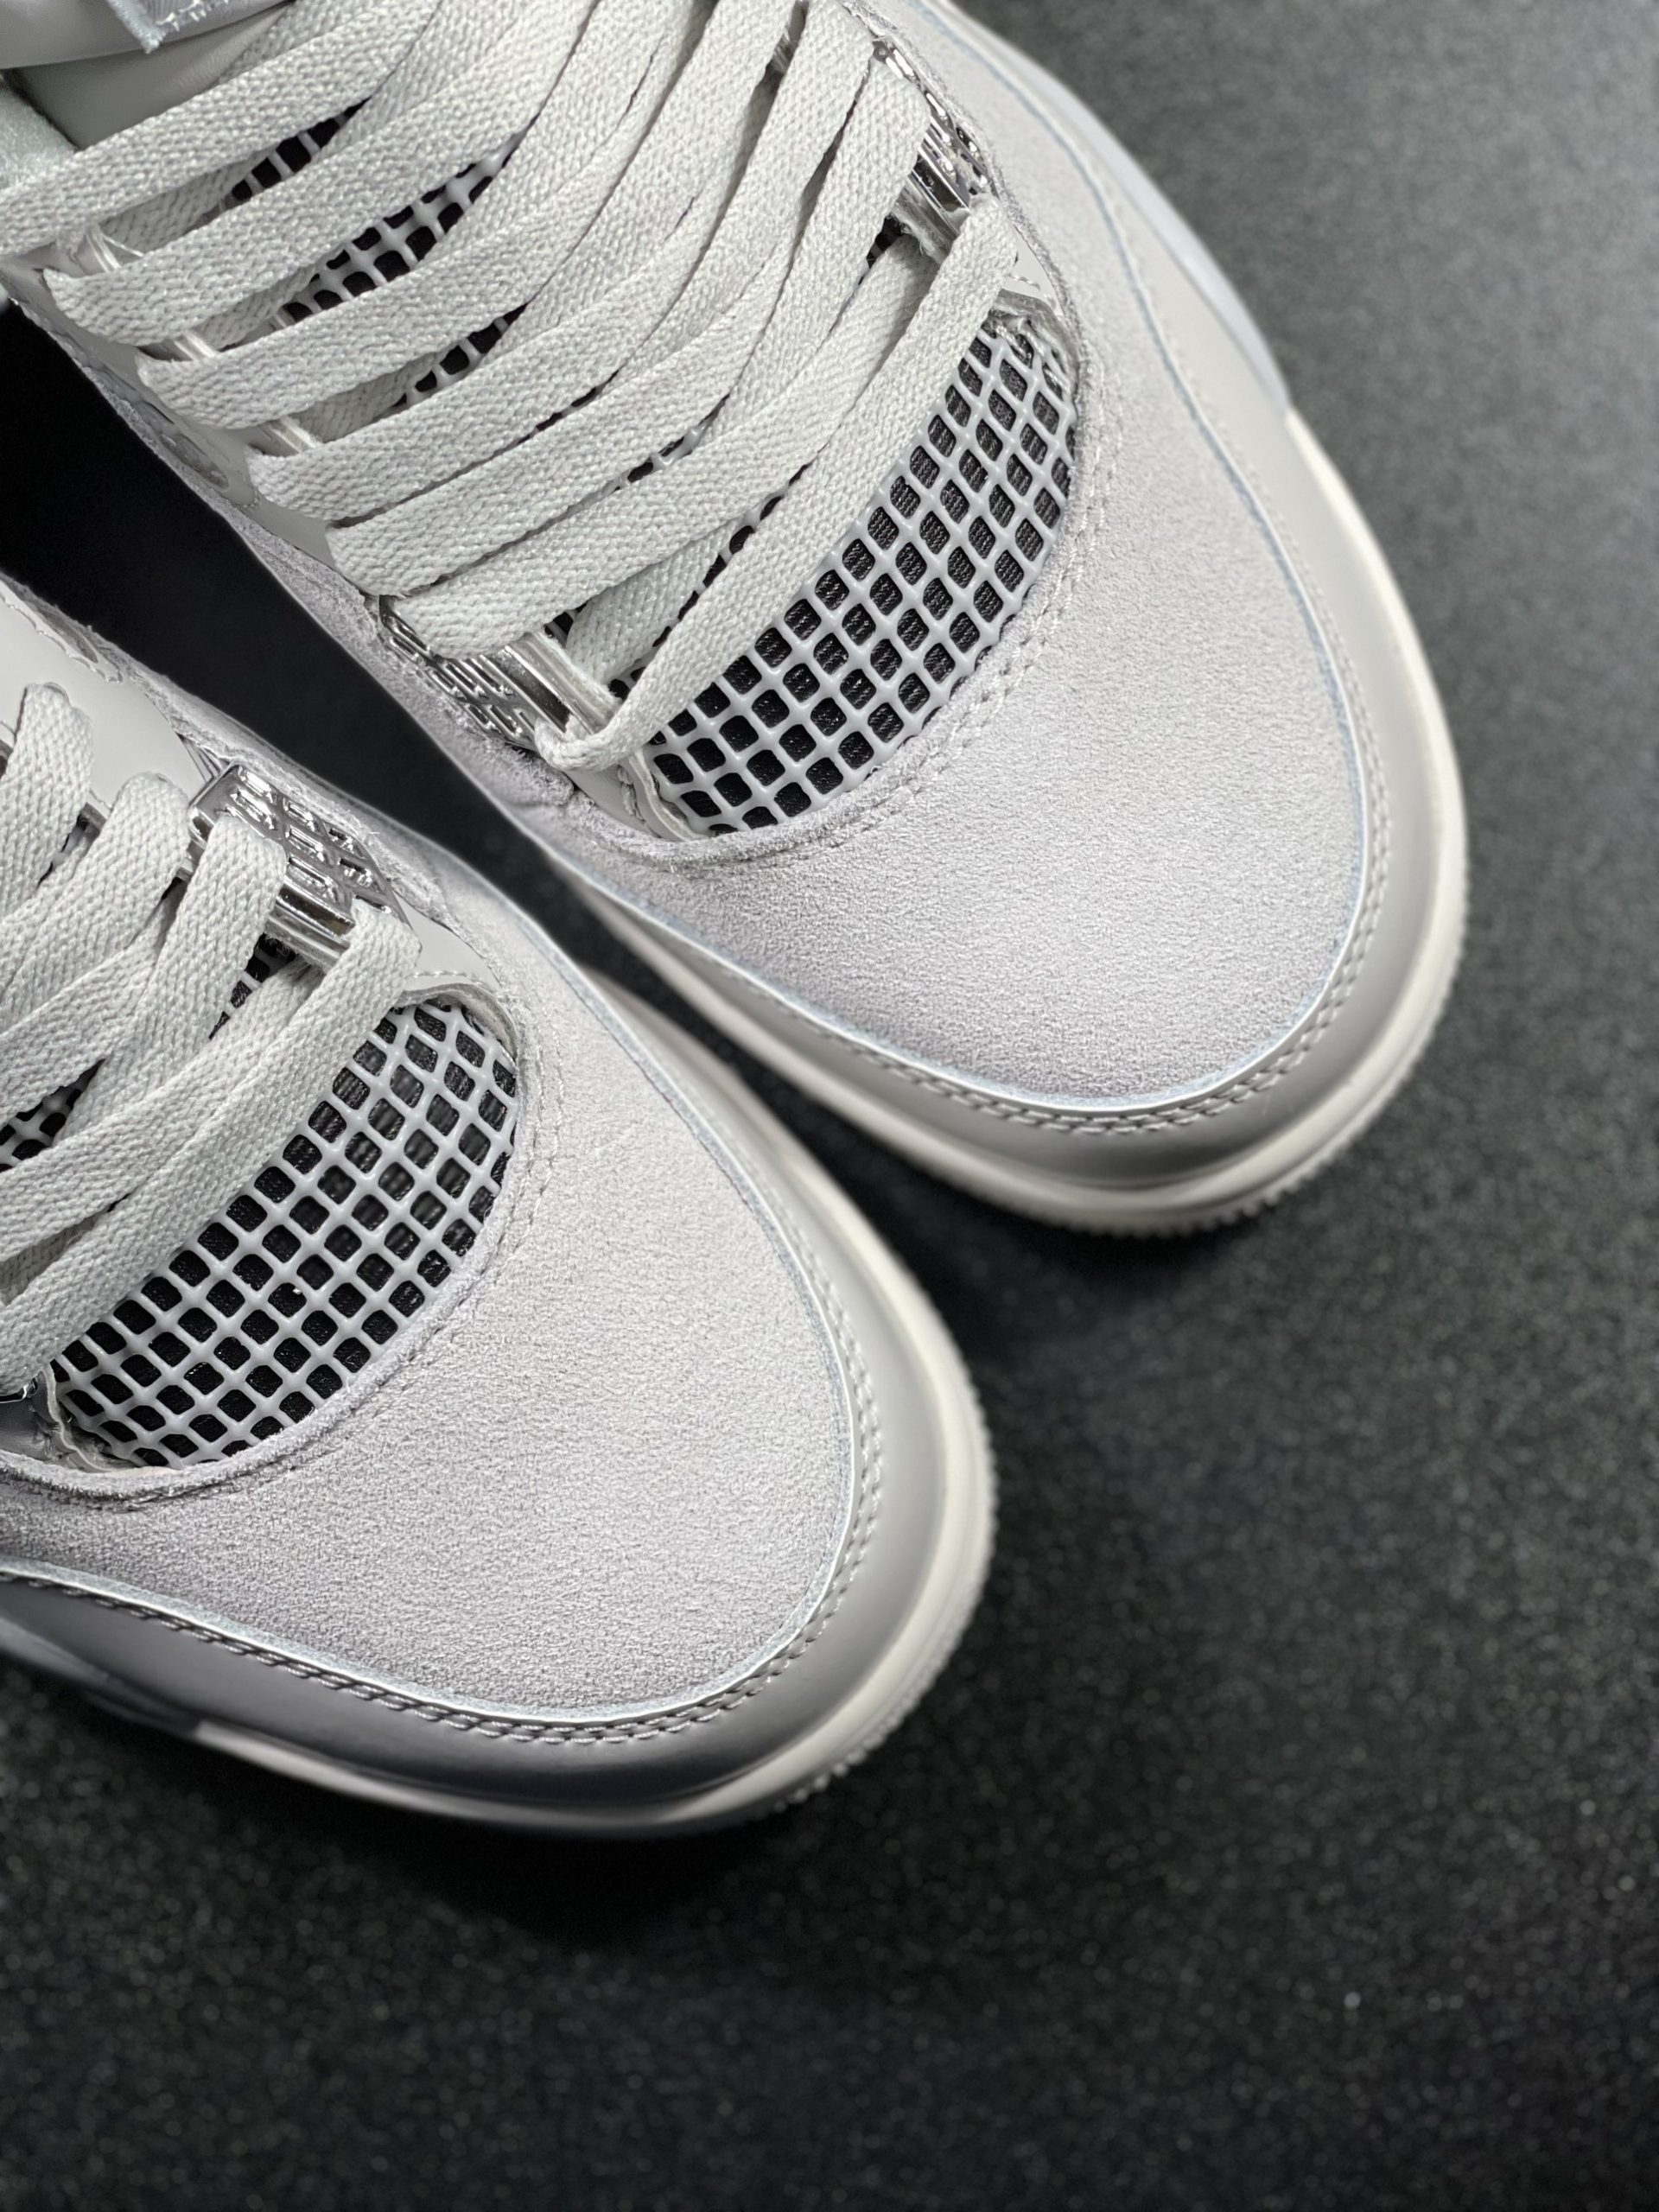 Giày Nike Air Jordan 4 Retro Frozen Moments Xám Trắng